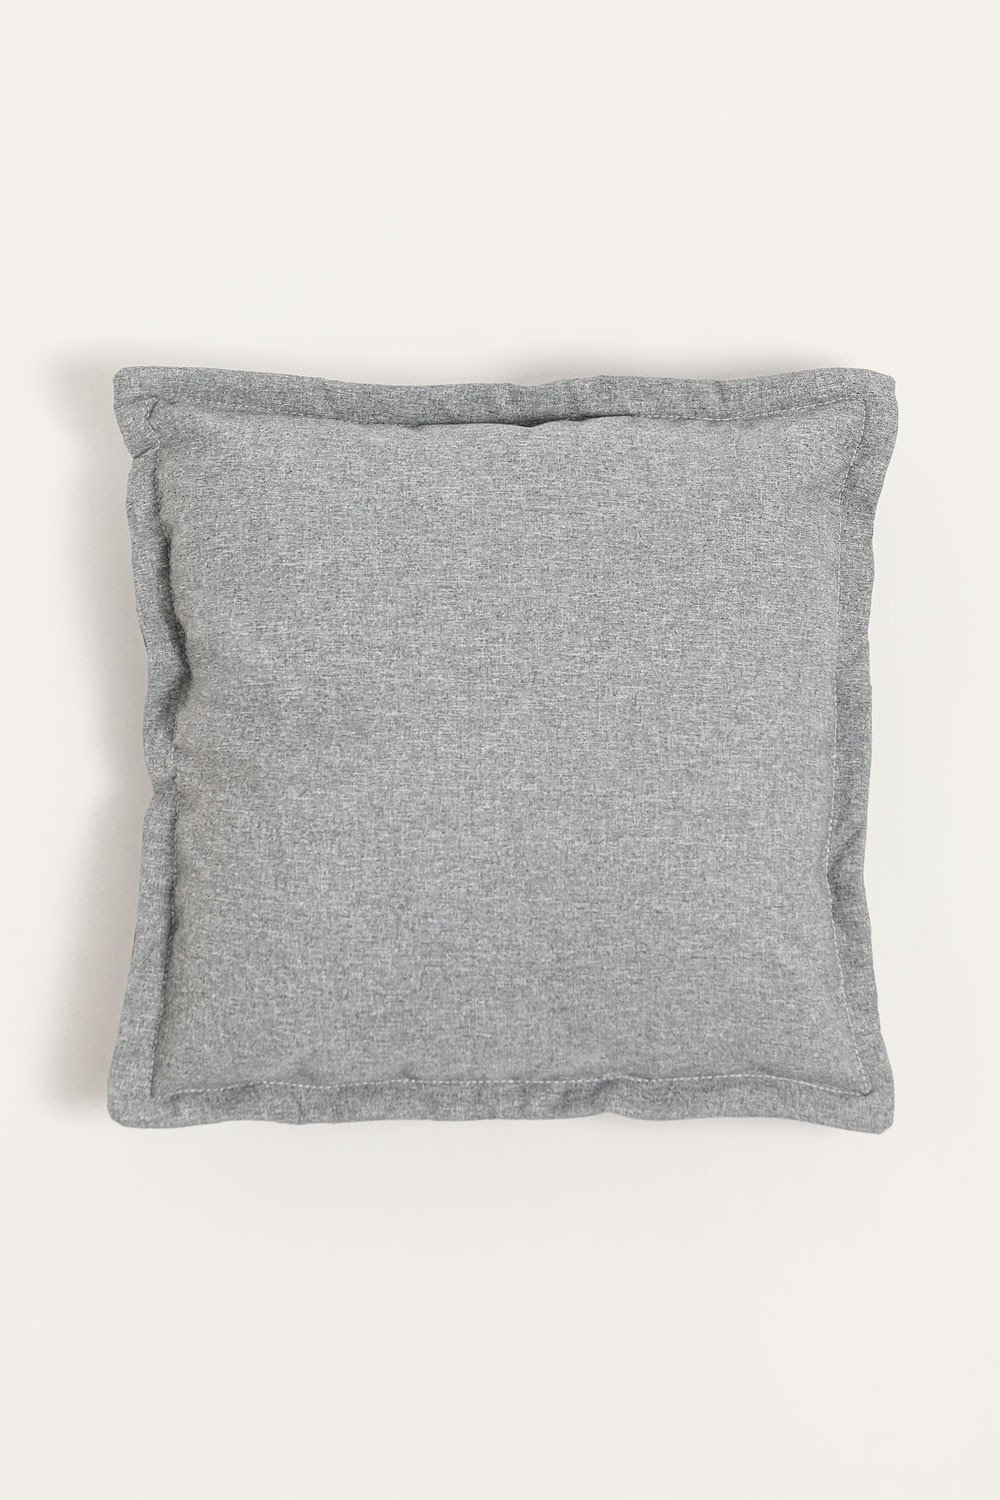 Kata Essentials square cushion (53x53 cm) , gallery image 1